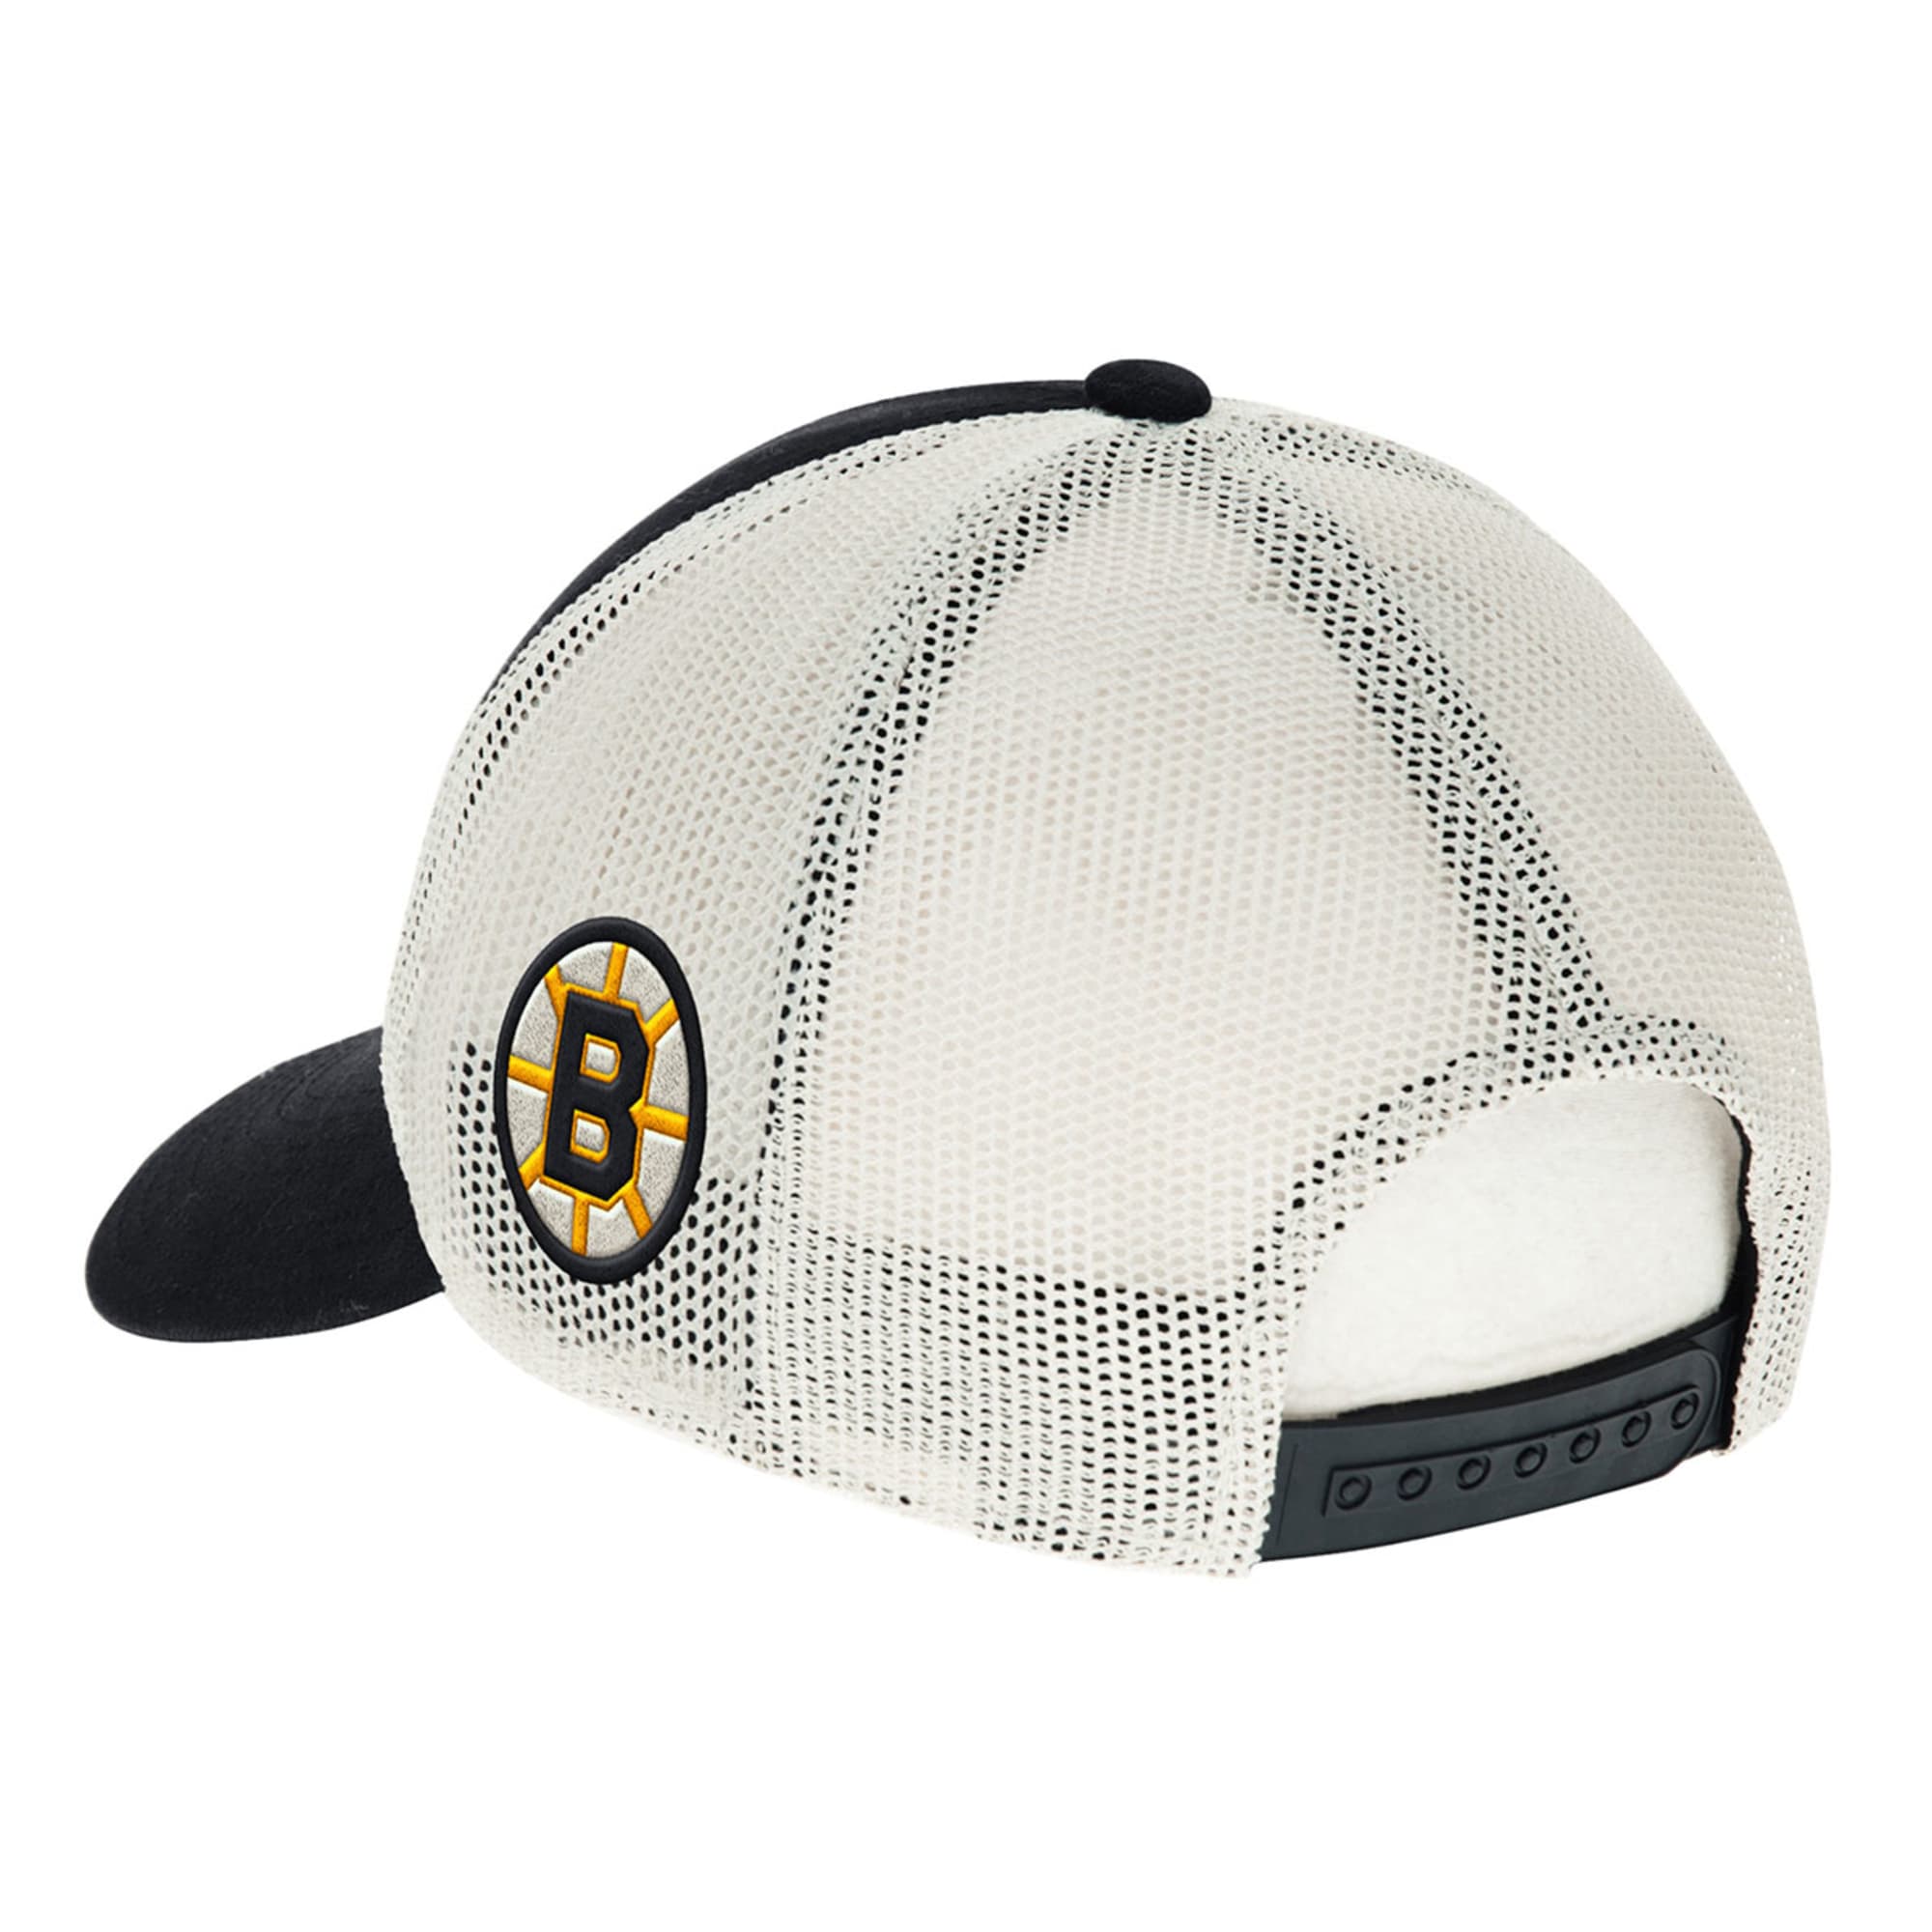 REEBOK Men's Boston Bruins CCM Cap - Bob's Stores